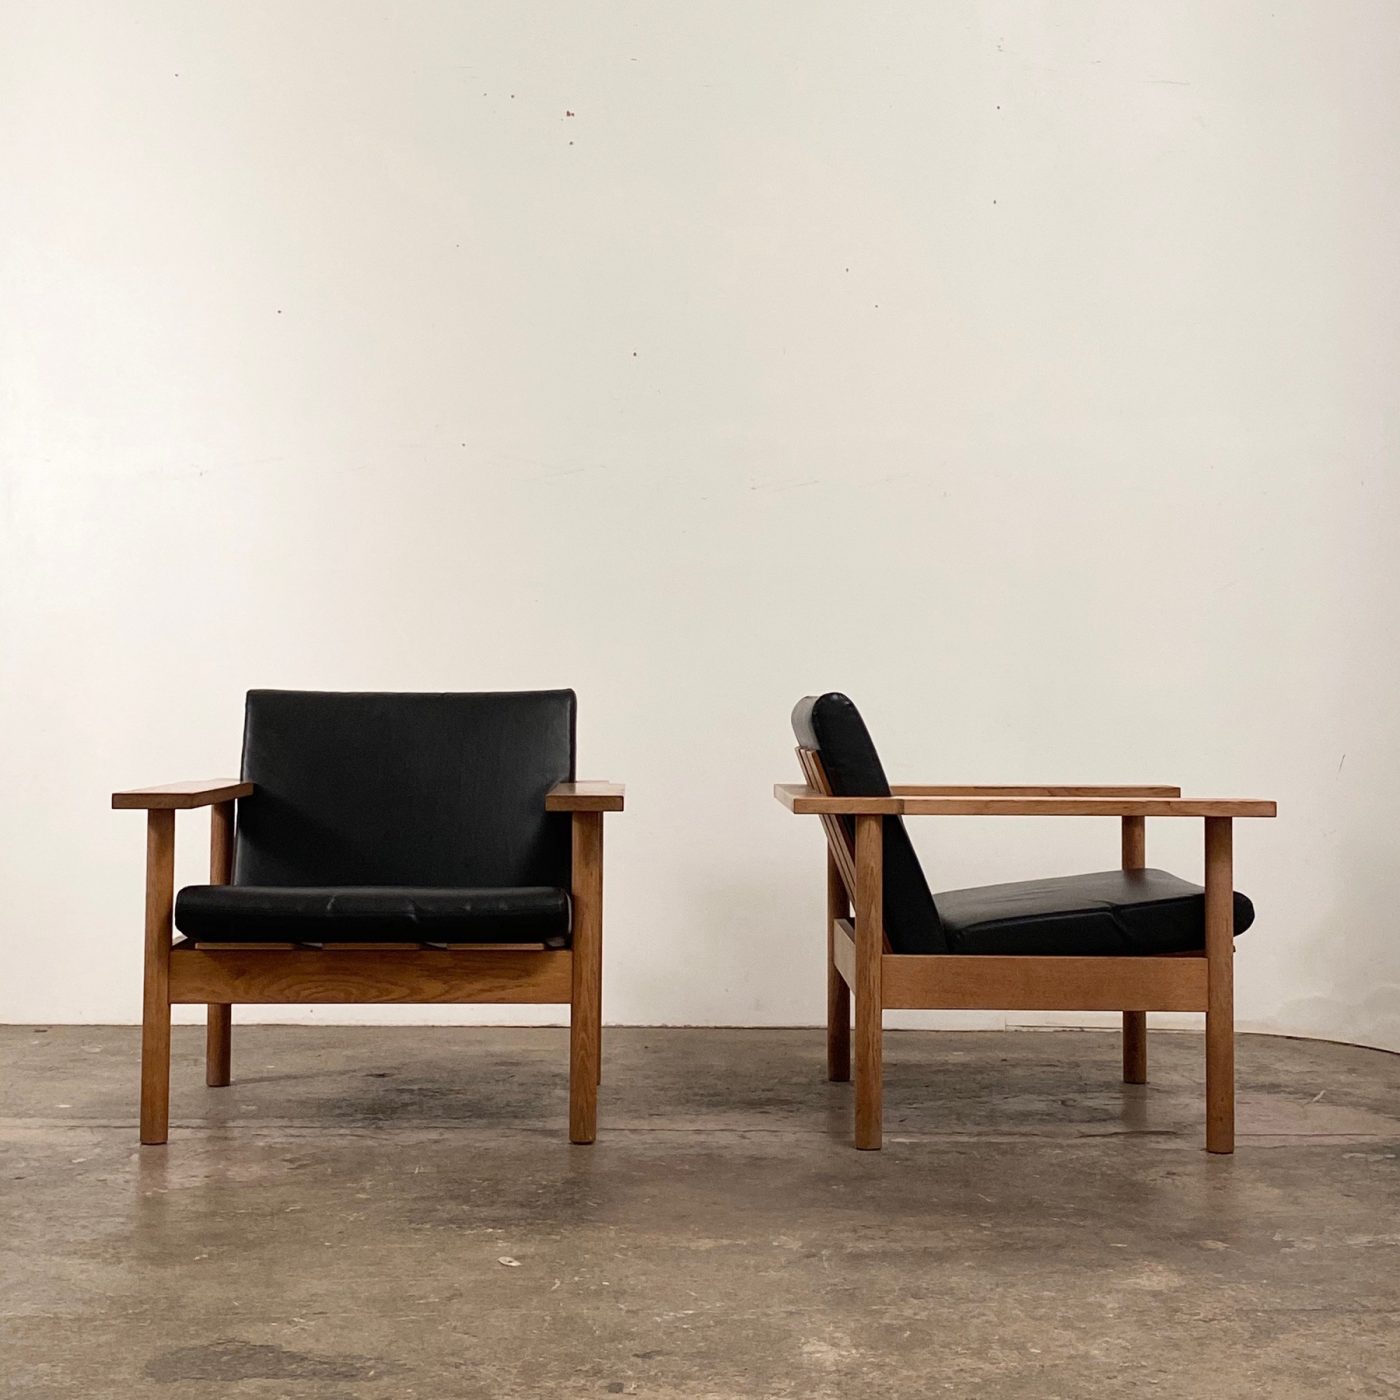 objet-vagabond-danish-chairs0005